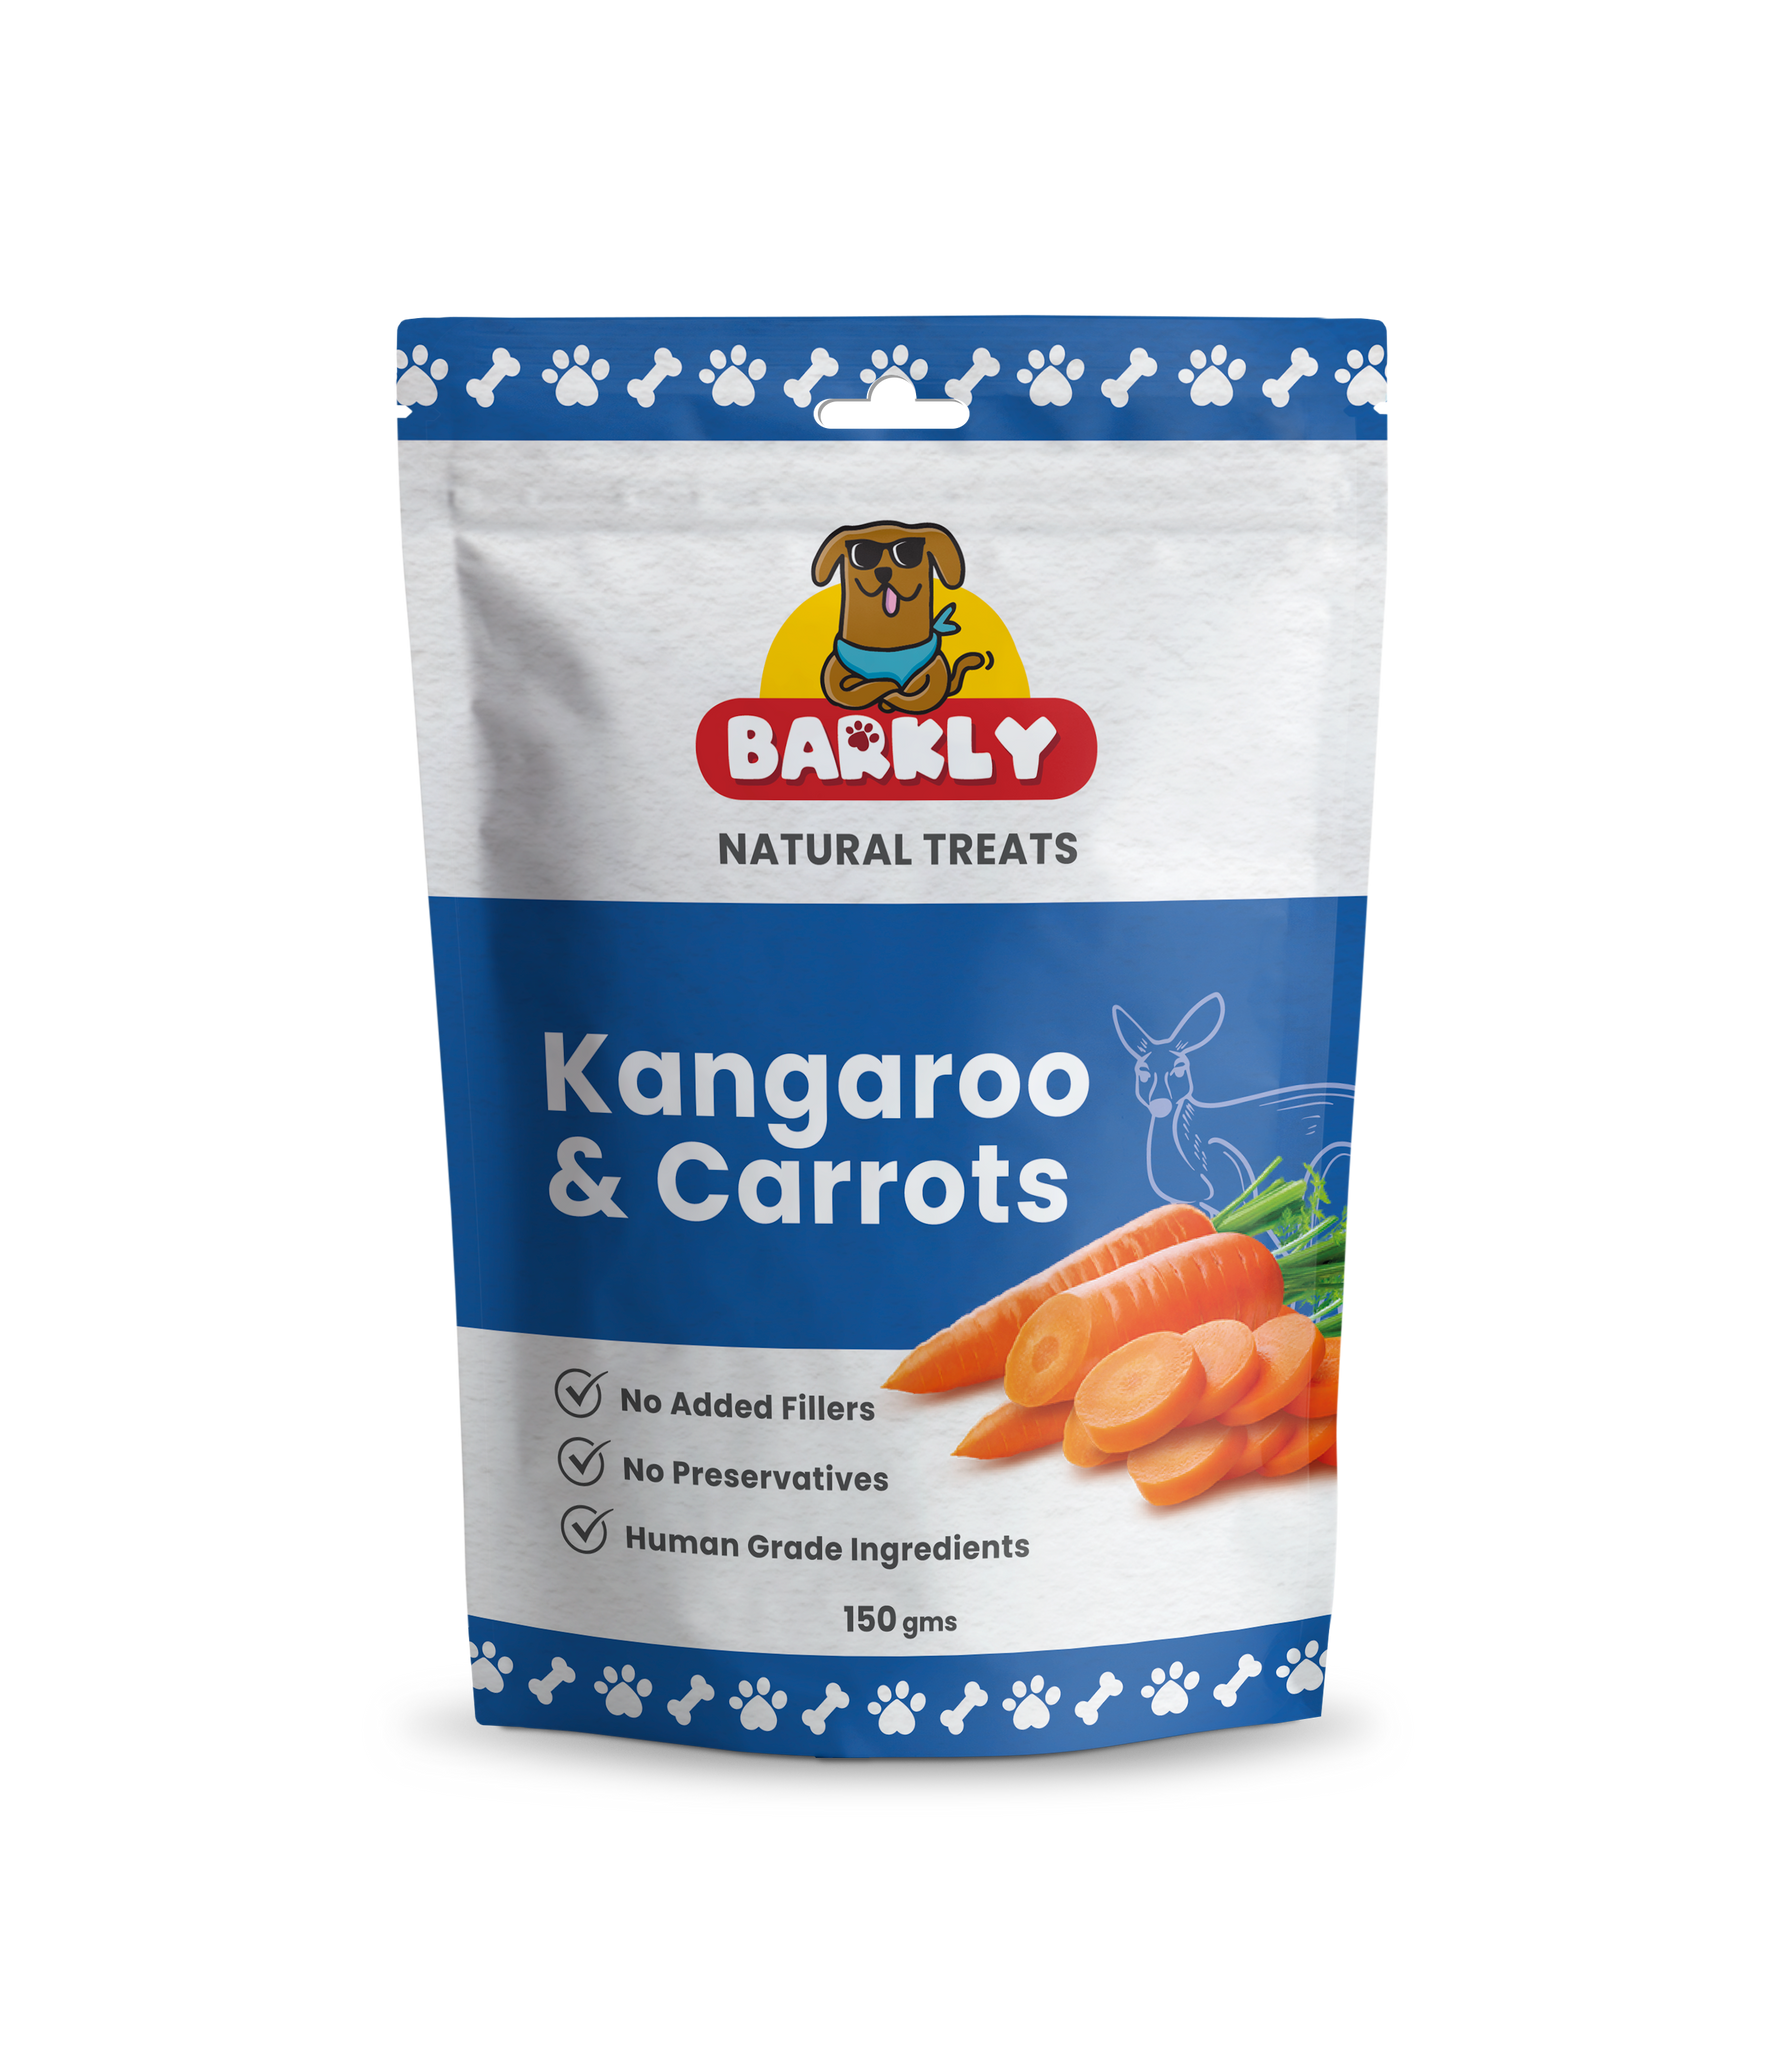 Pack of Kangaroo and Carrot dog treats displayed